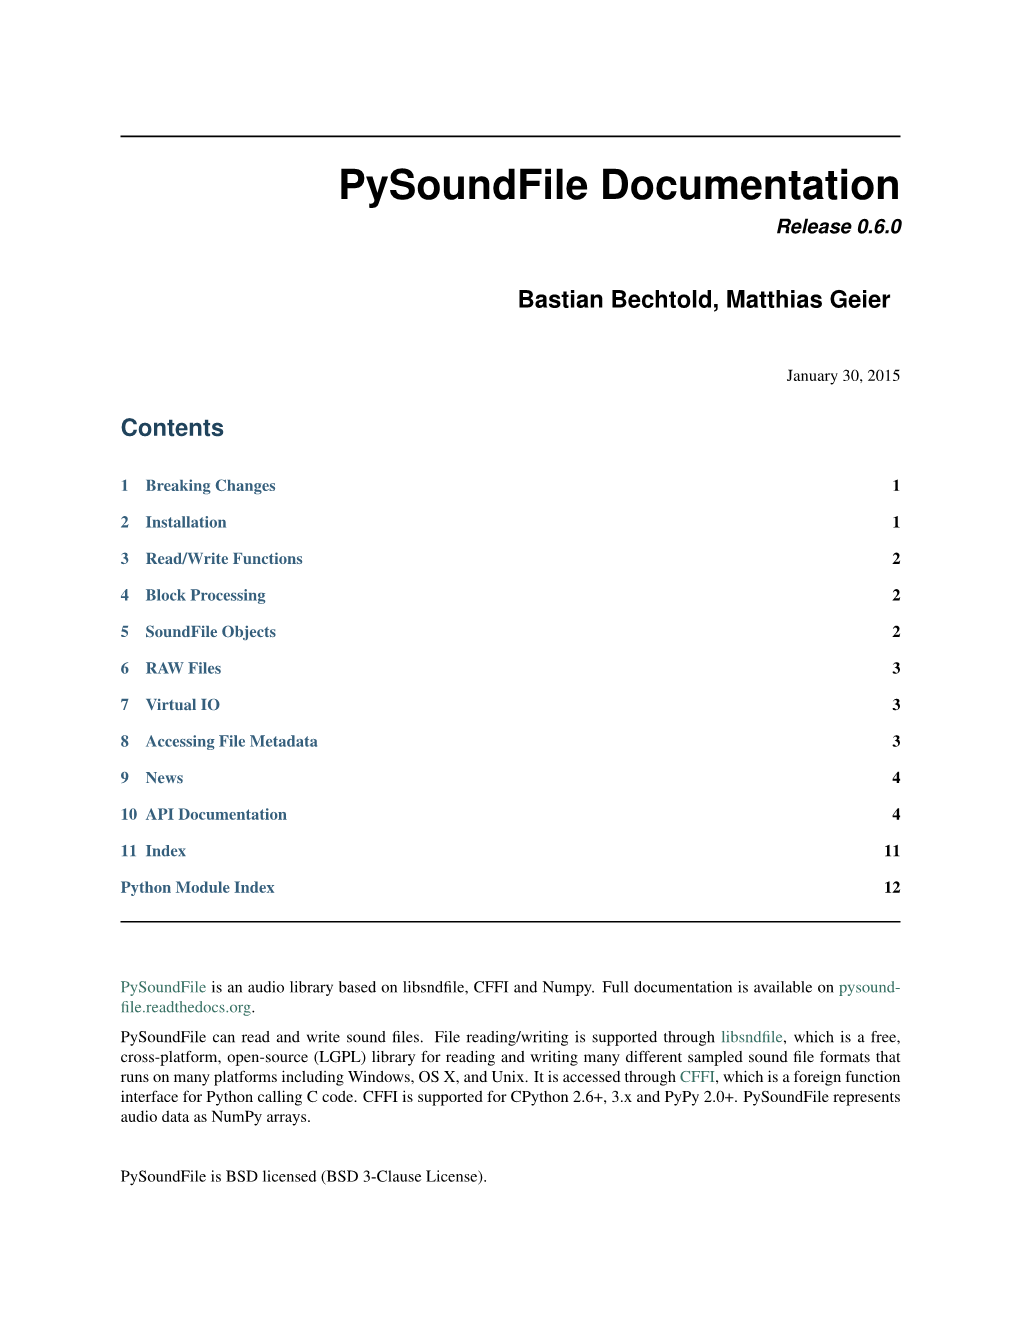 Pysoundfile Documentation Release 0.6.0